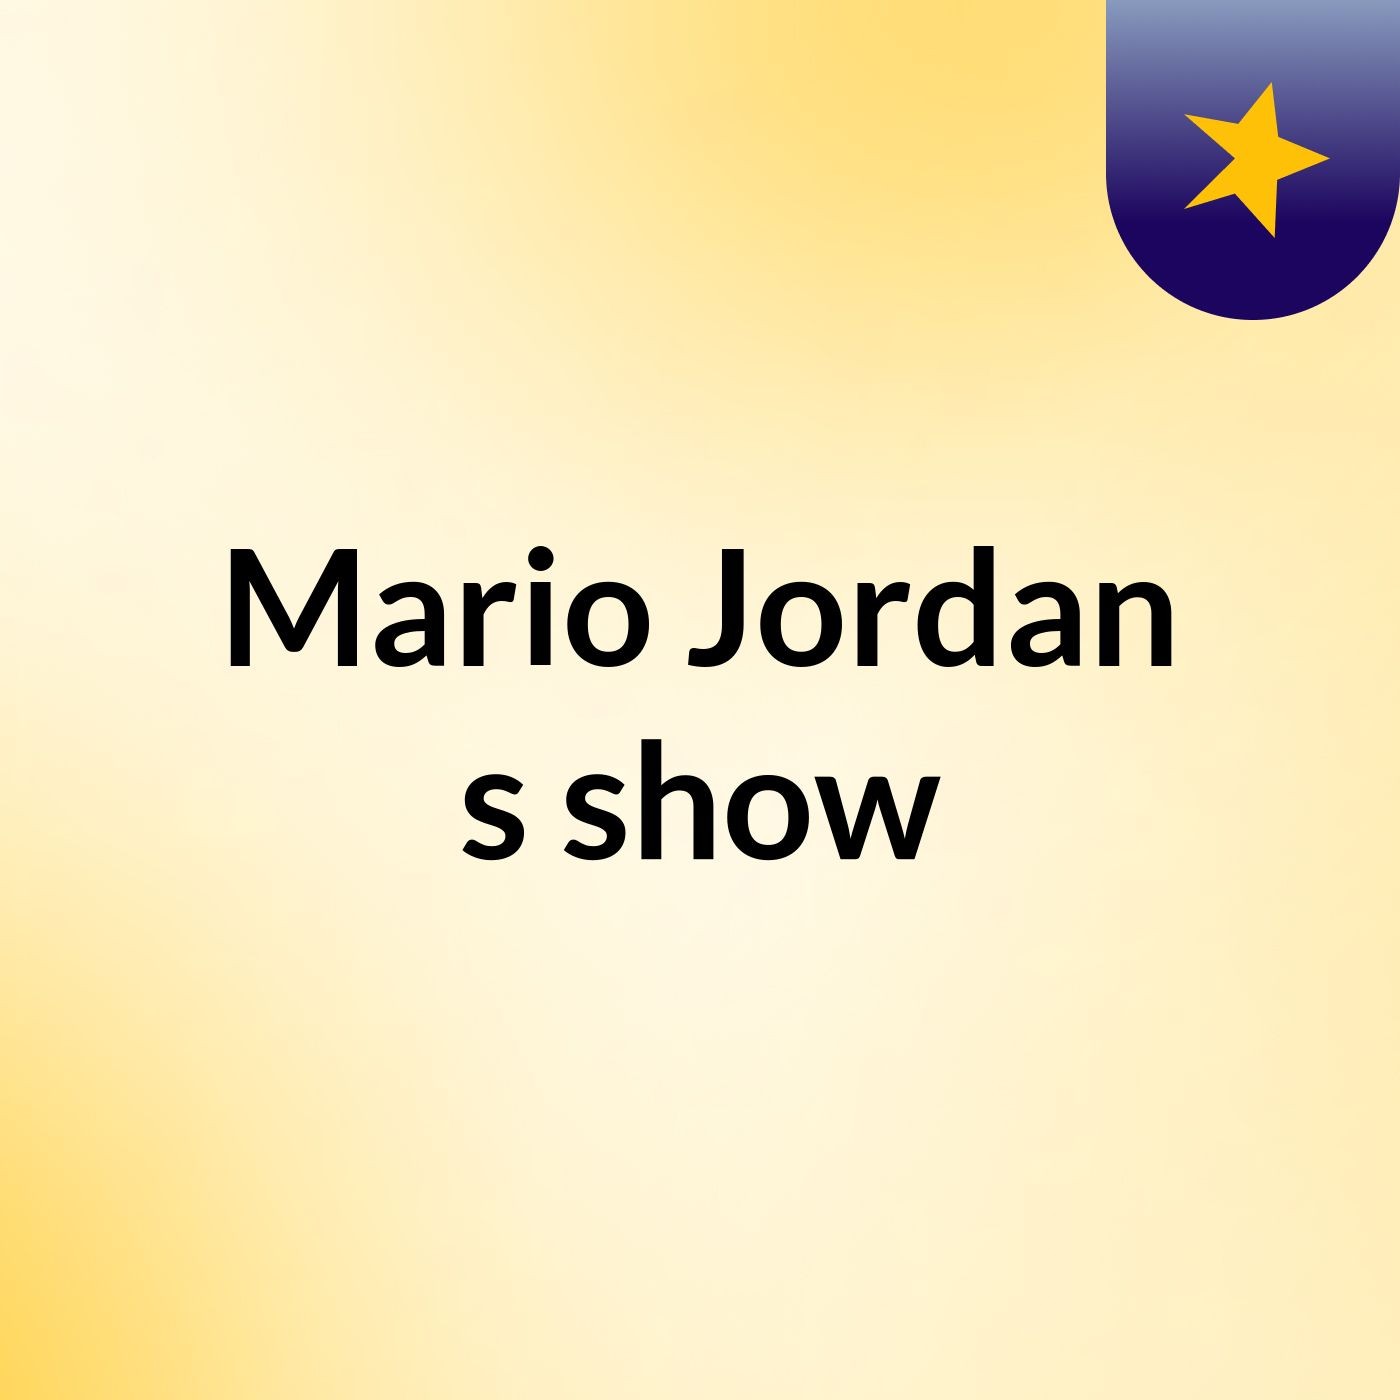 Episode 13 - Mario Jordan's show